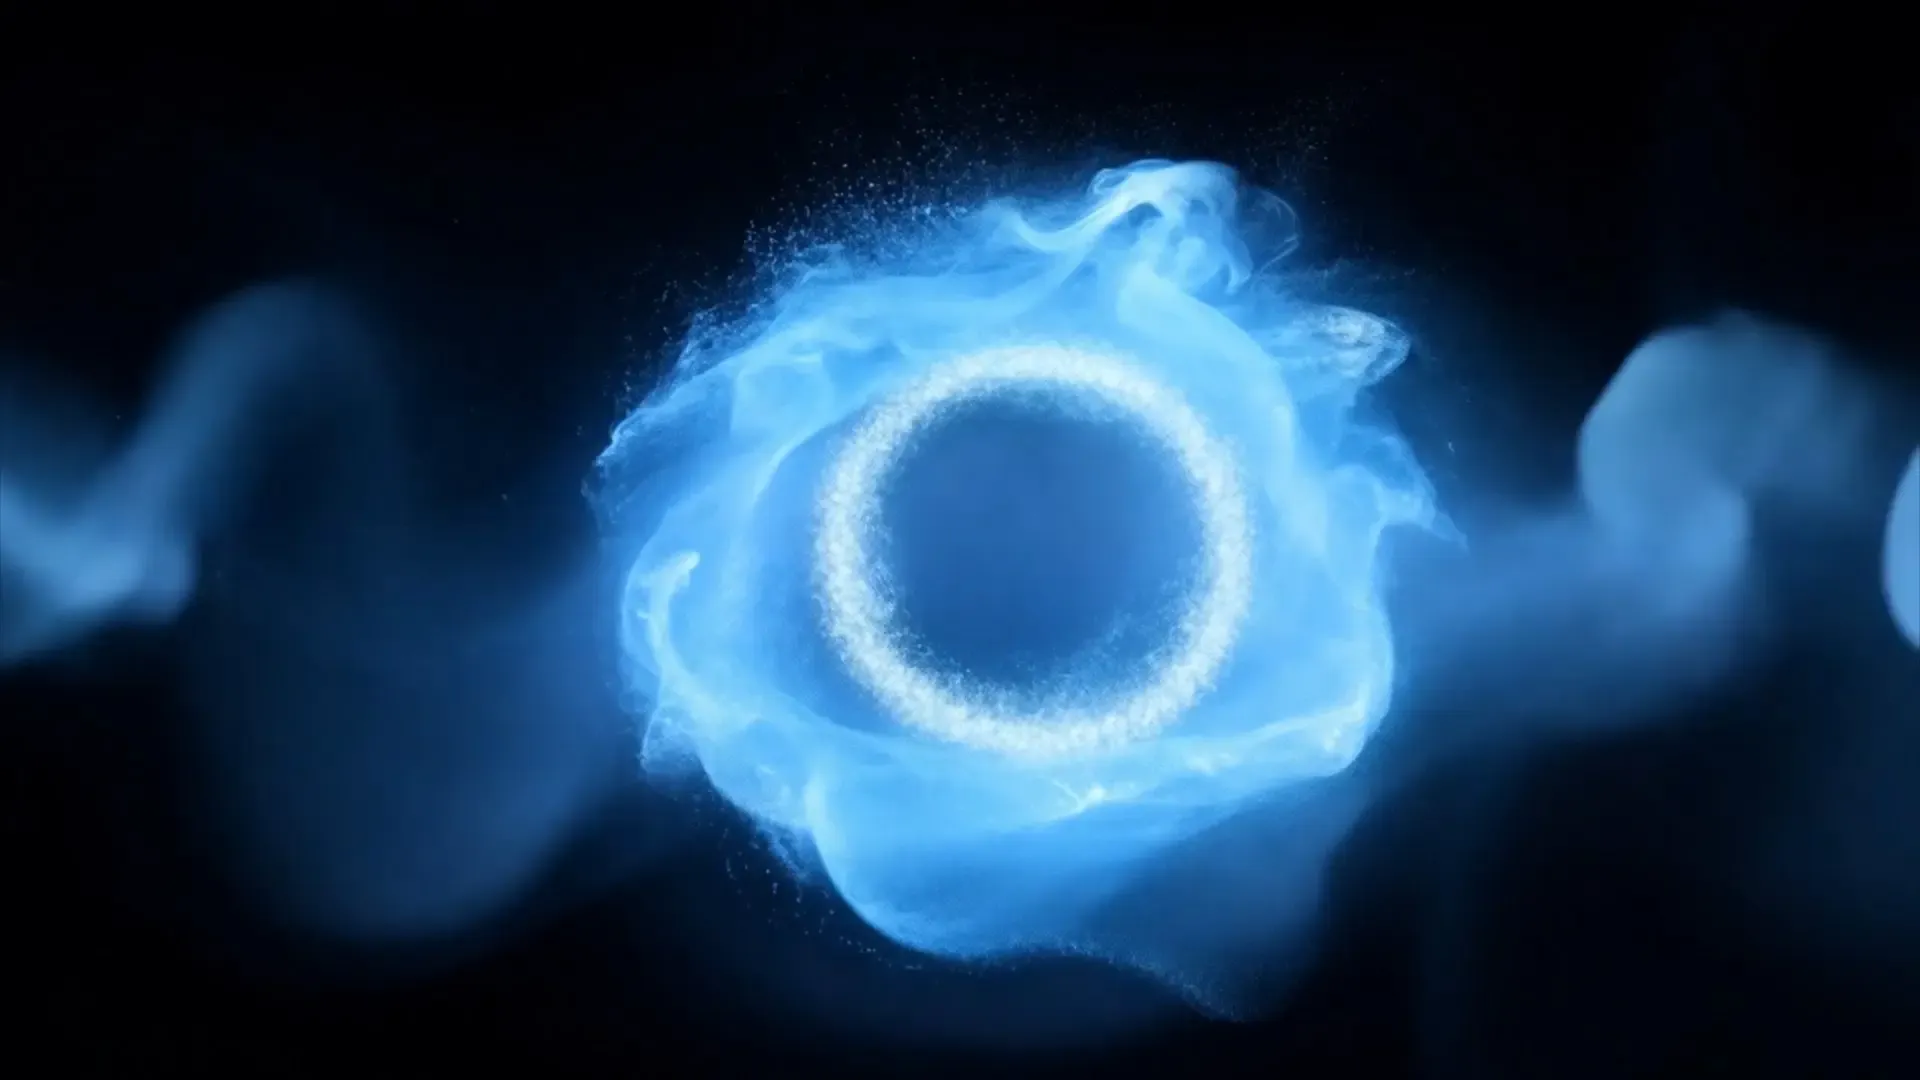 Blue Aura Logo Reveal Background with Celestial Glow